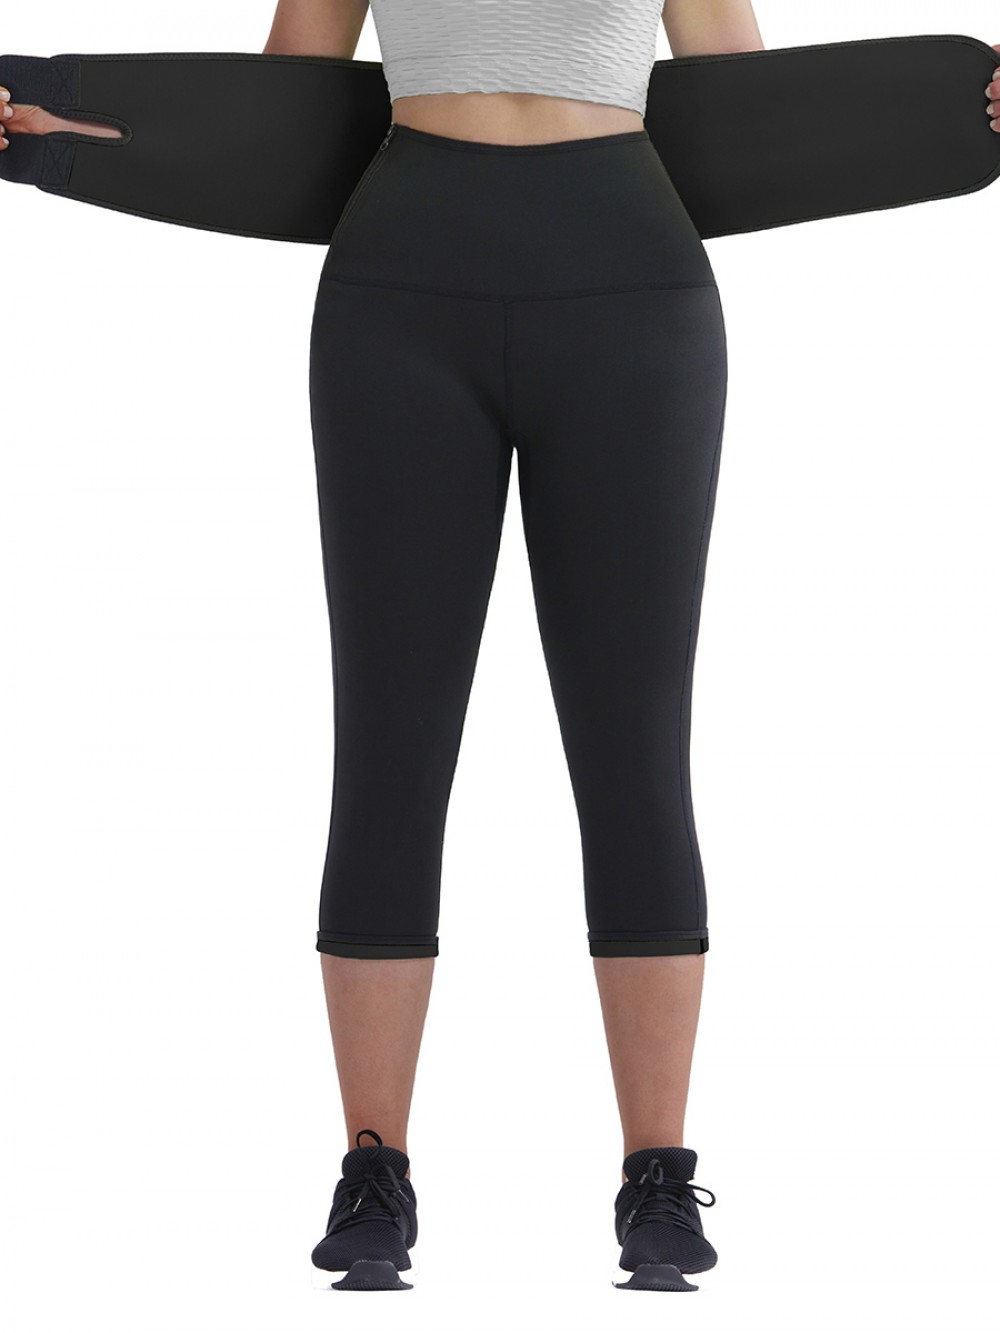 Ultimate Stretch Black Big Size Neoprene Shaper Pants With Belt